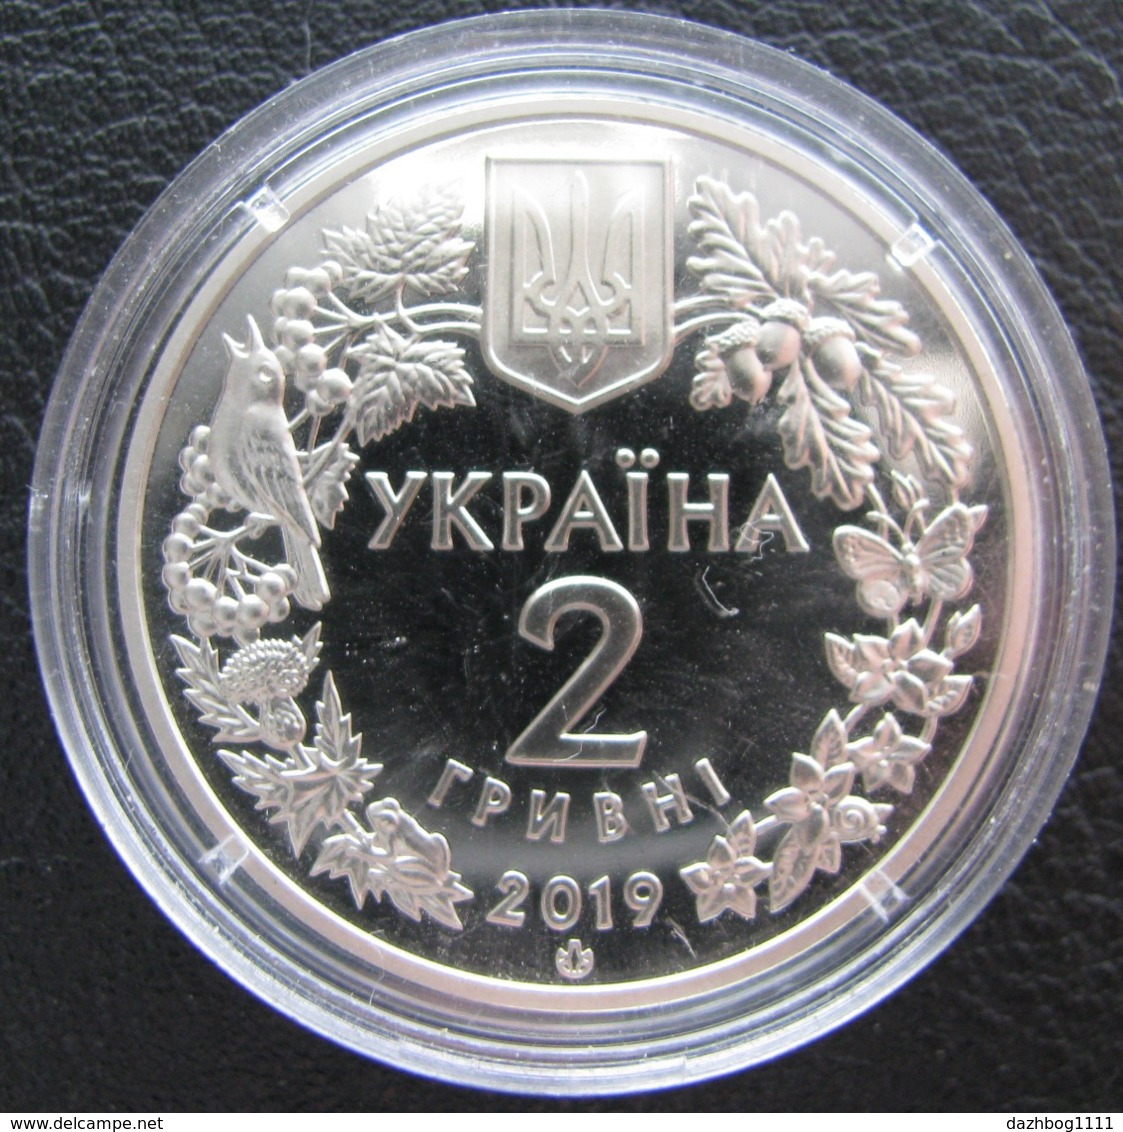 White-tailed Eagle Ukraine 2019 Coin 2 UAH - Ukraine